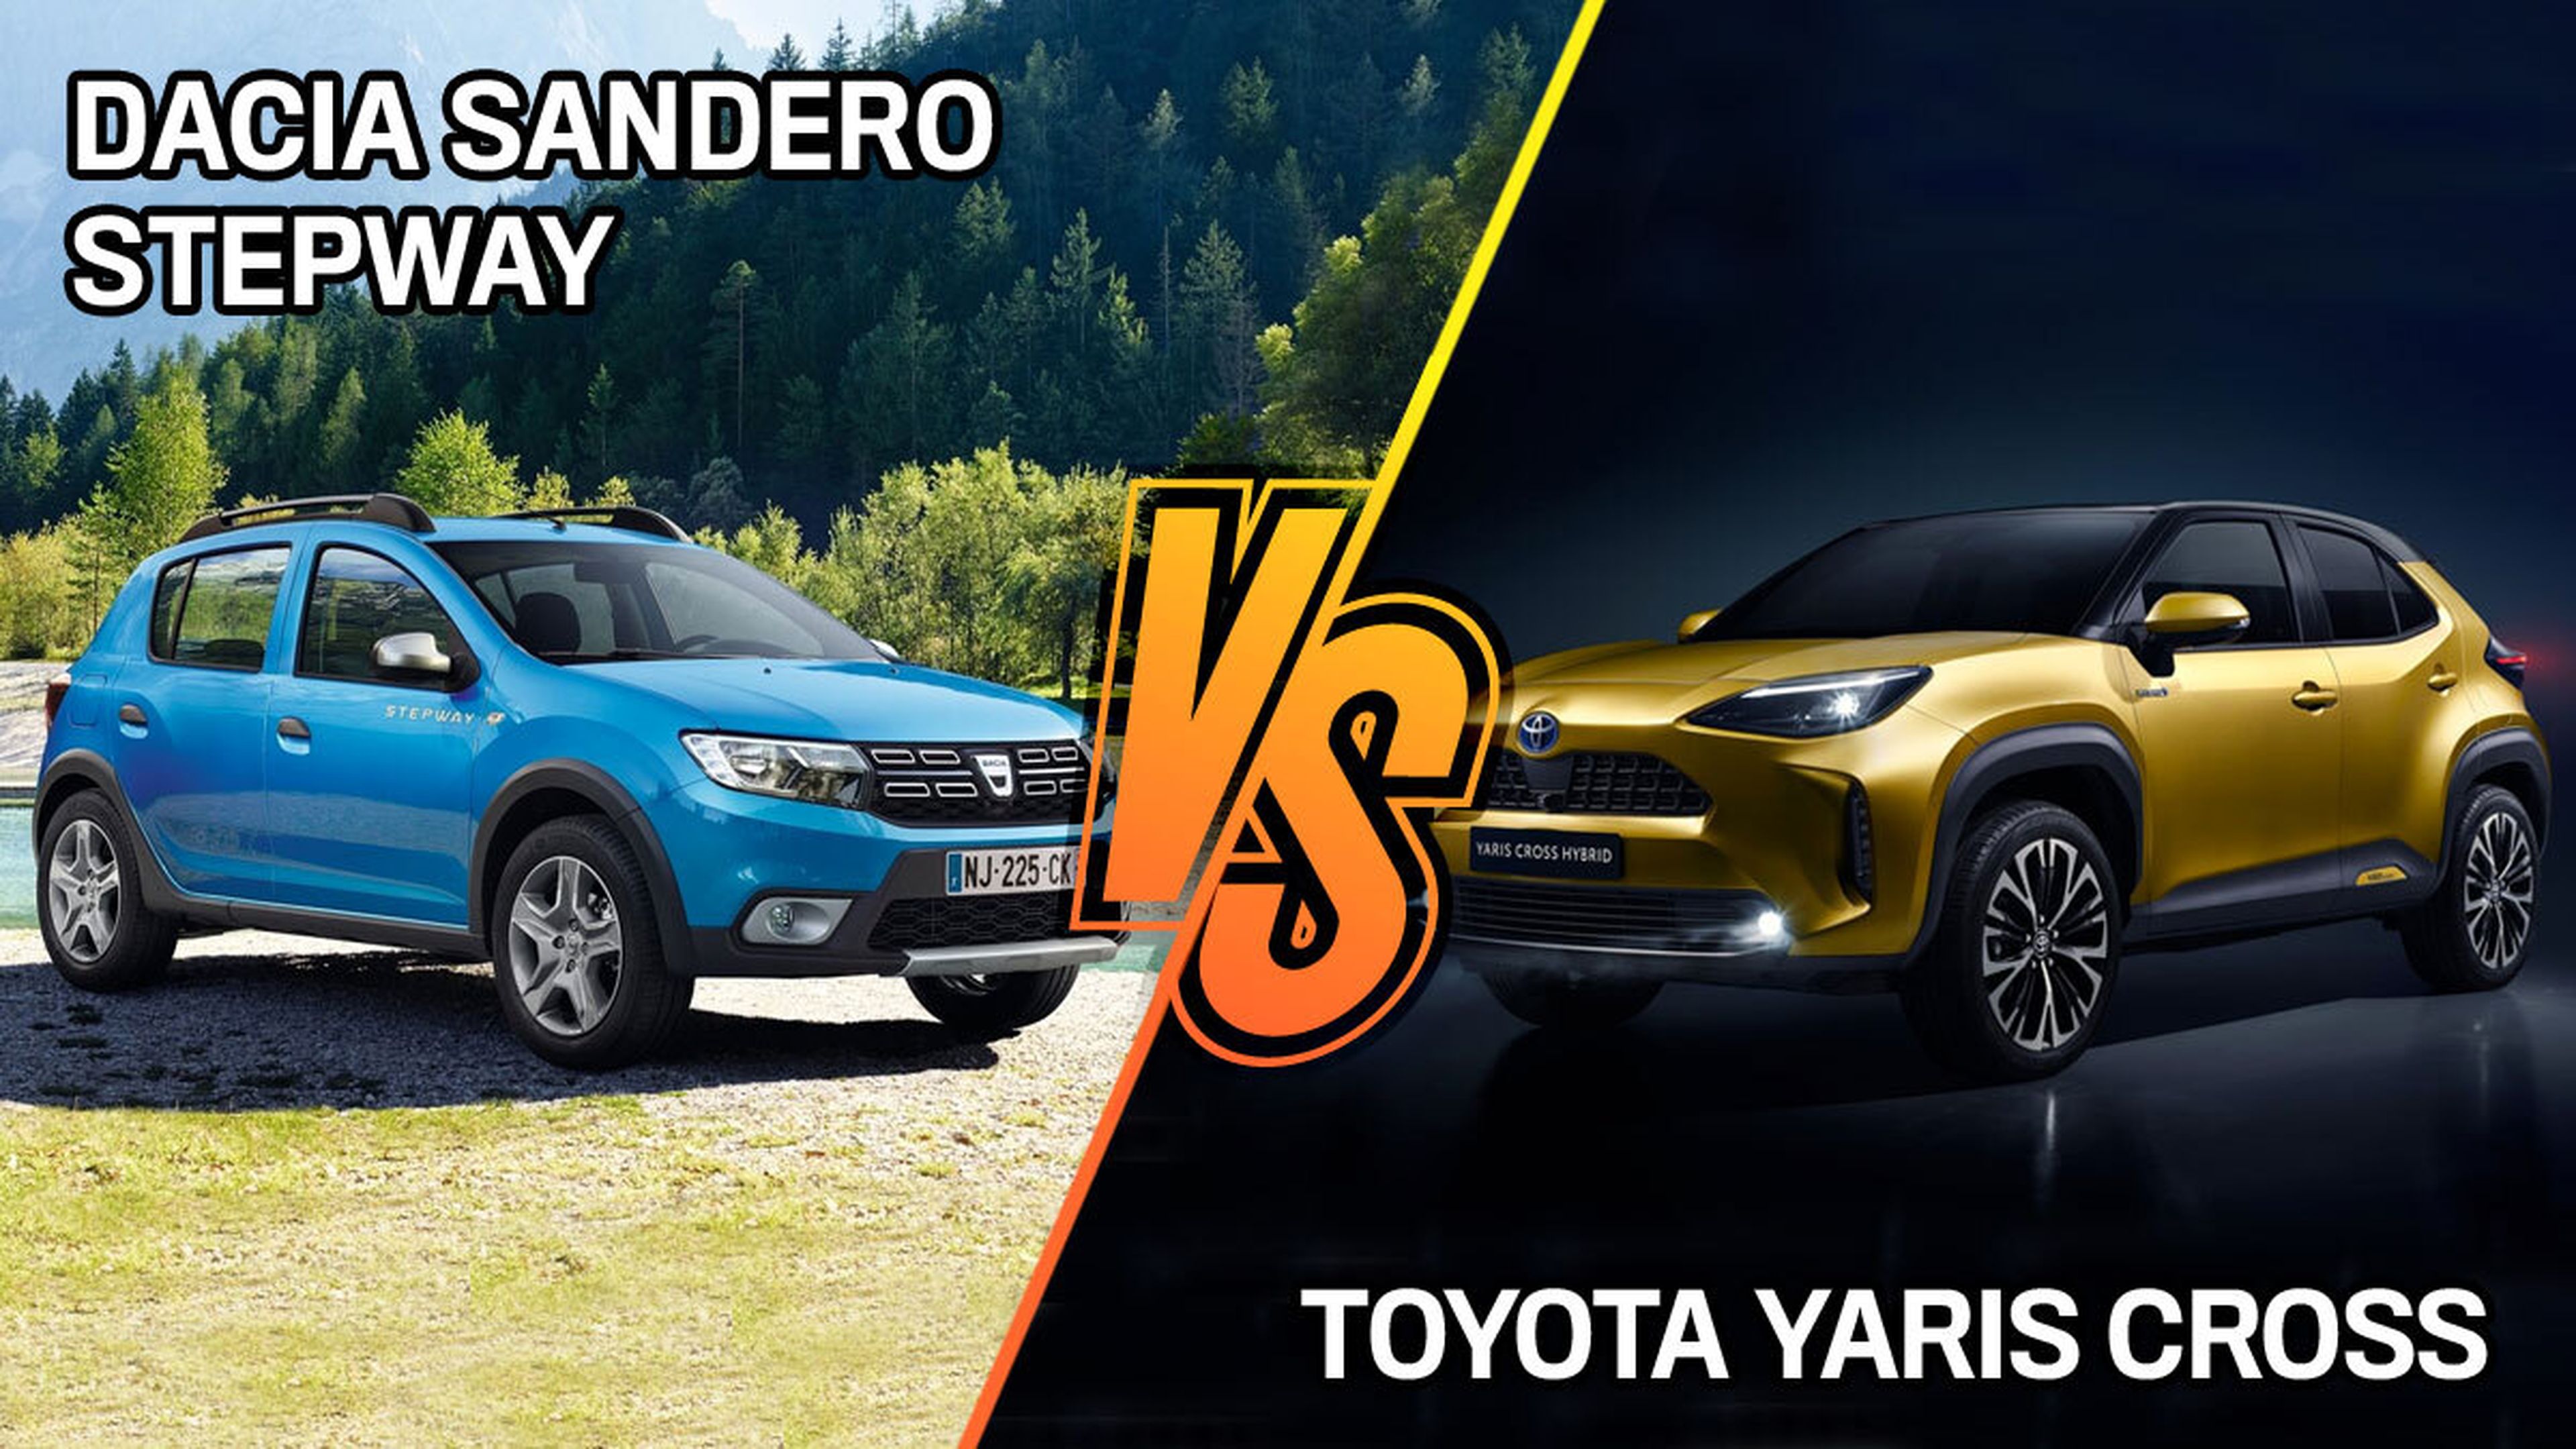 Dacia Sandero Stepway o Toyota Yaris Cross, ¿cuál es mejor?